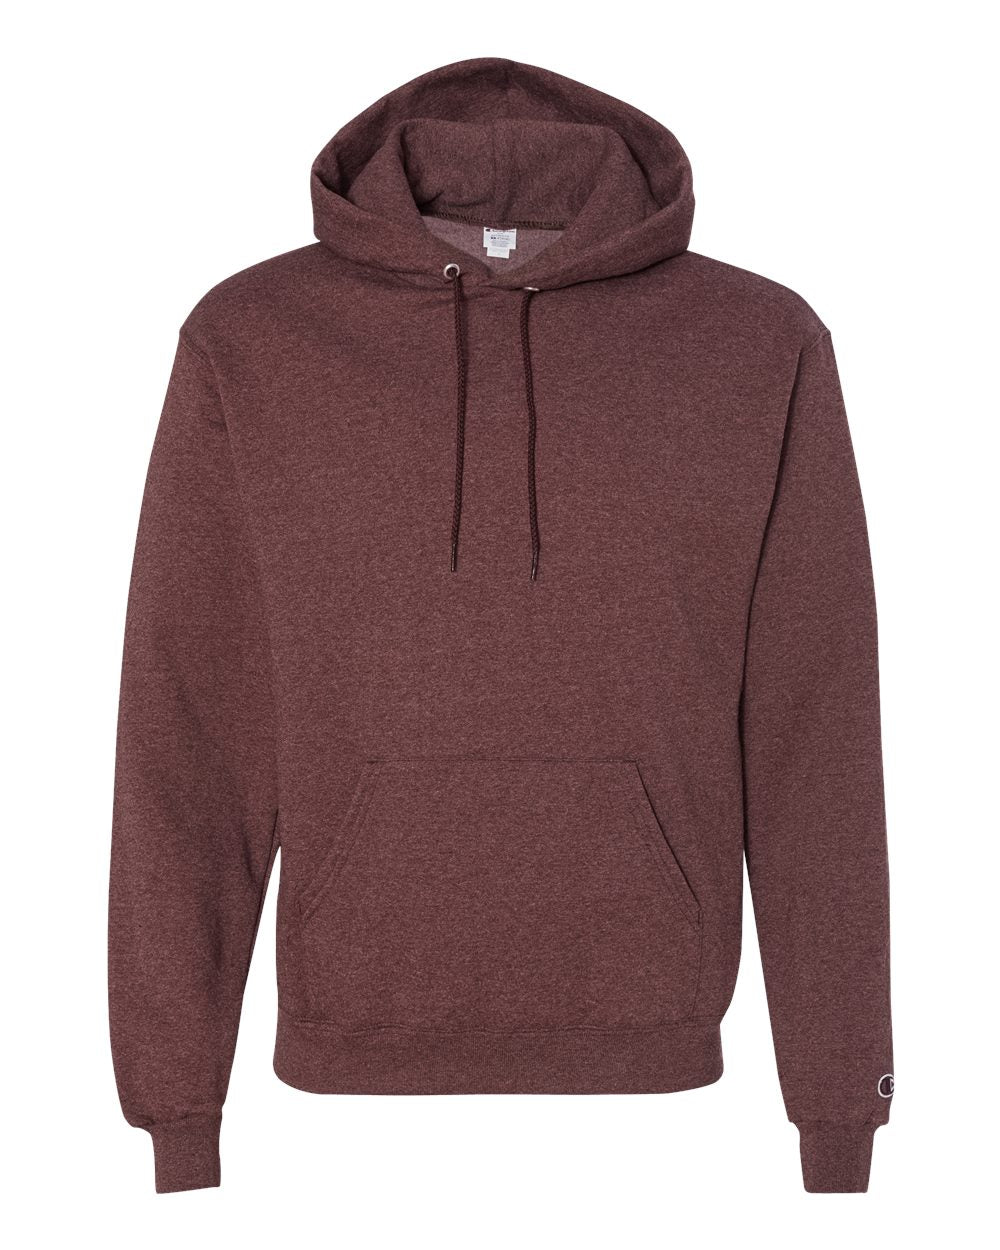 champion powerblend hooded sweatshirt maroon heather